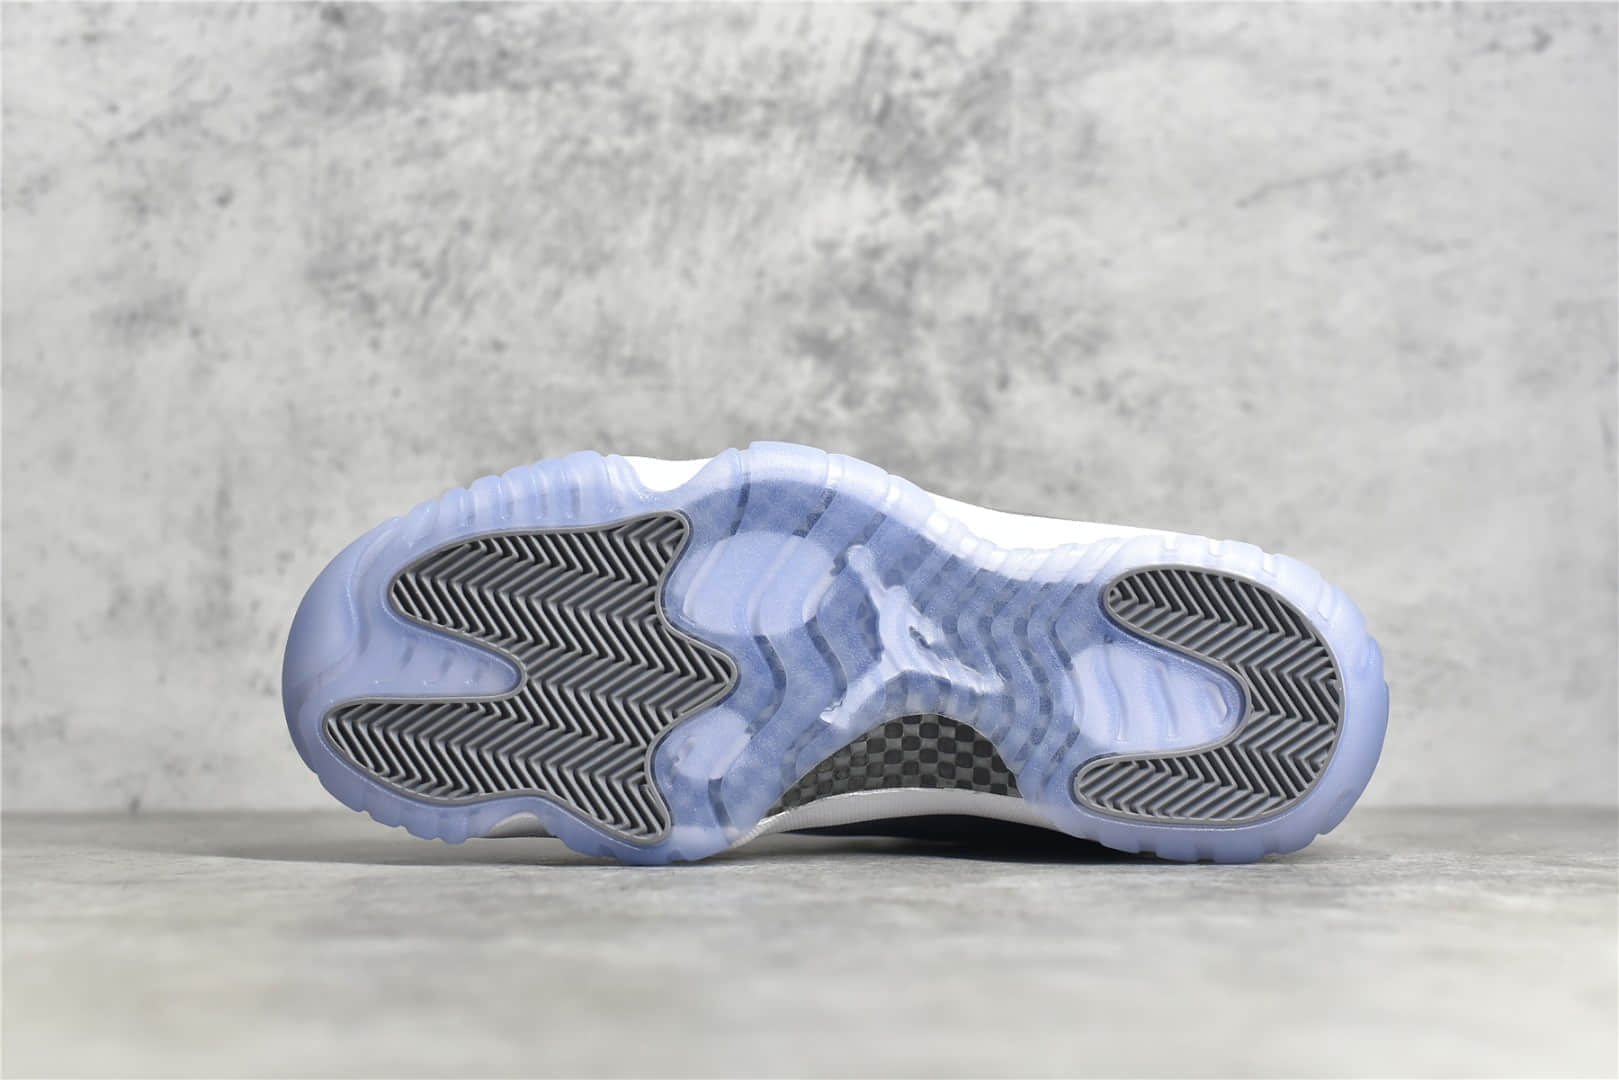 AJ11酷灰高帮实战篮球鞋 Air Jordan 11 “Cool Grey” 真碳纤维AJ11灰色原厂进口材质LJR纯原版本 货号：CT8012-005-潮流者之家